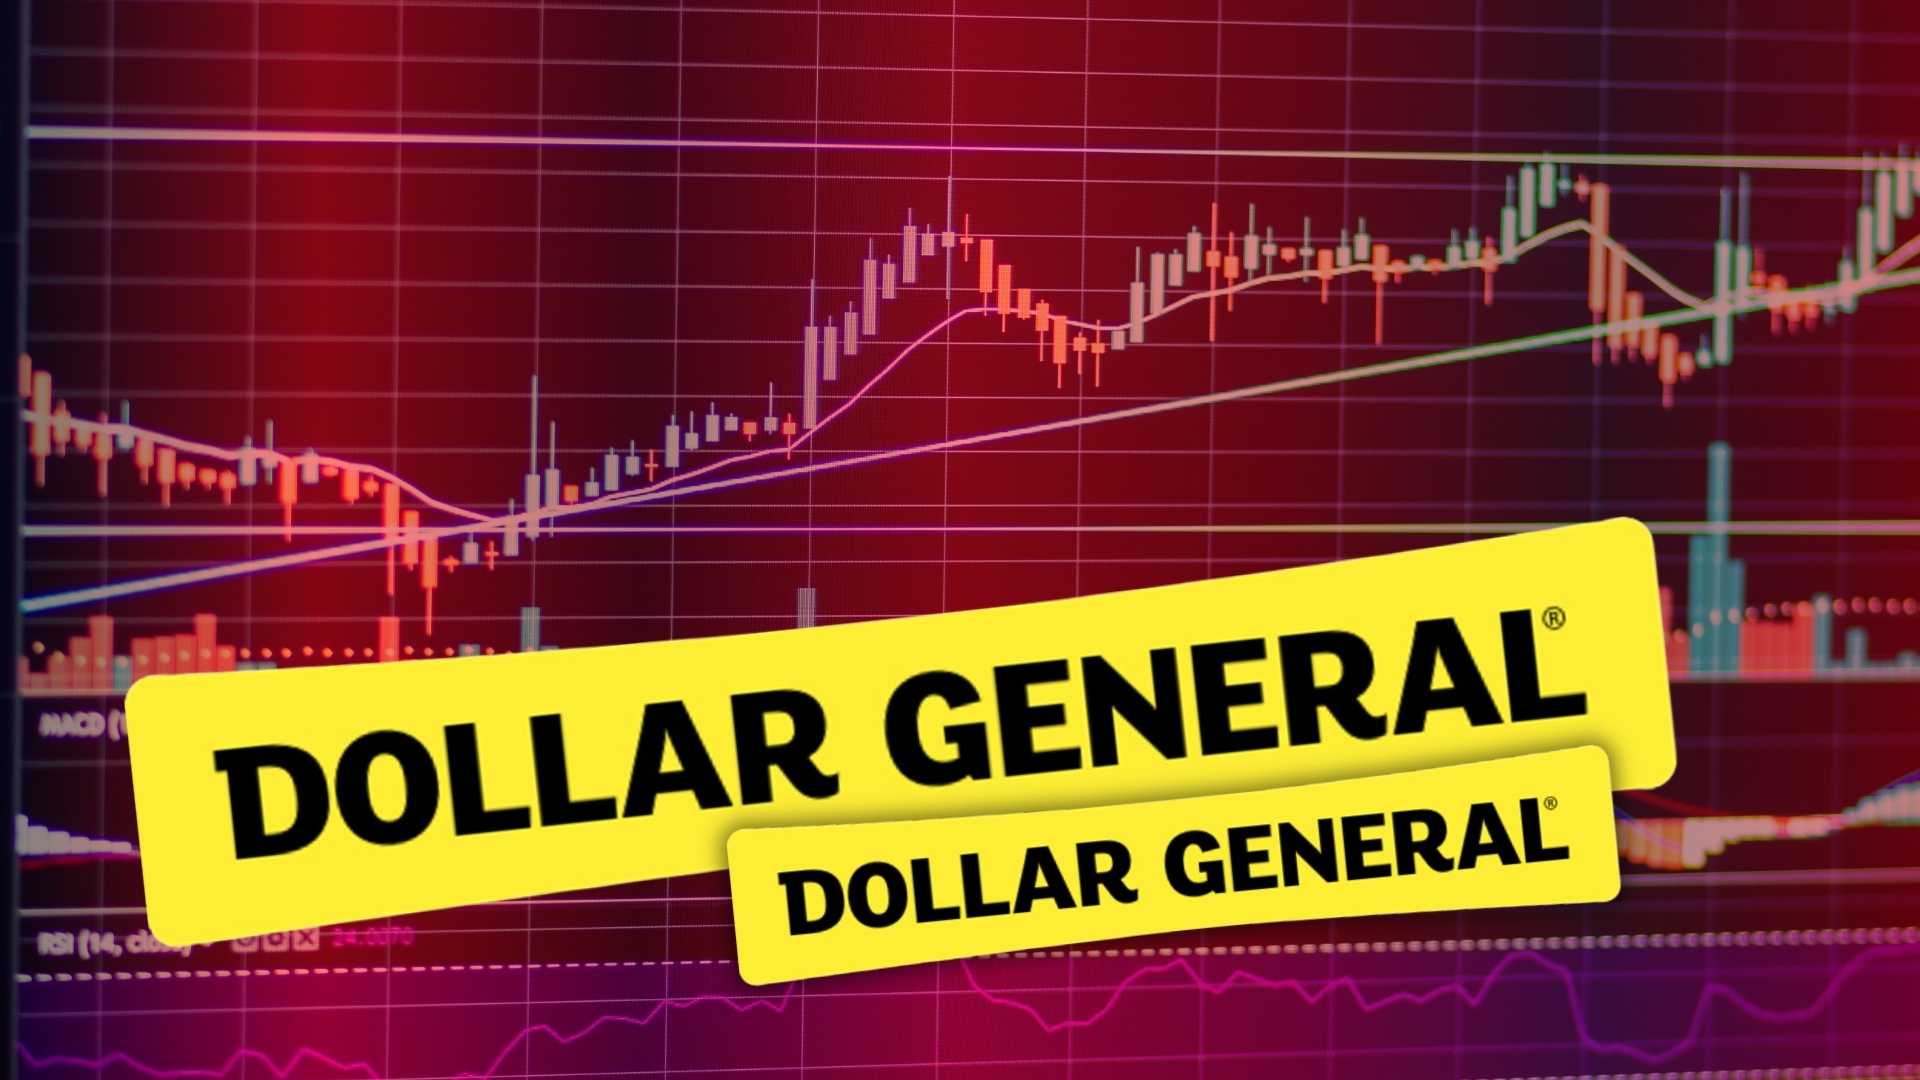 Dollar General Stock (DG) Price tumble 20% after Quarter Earnings